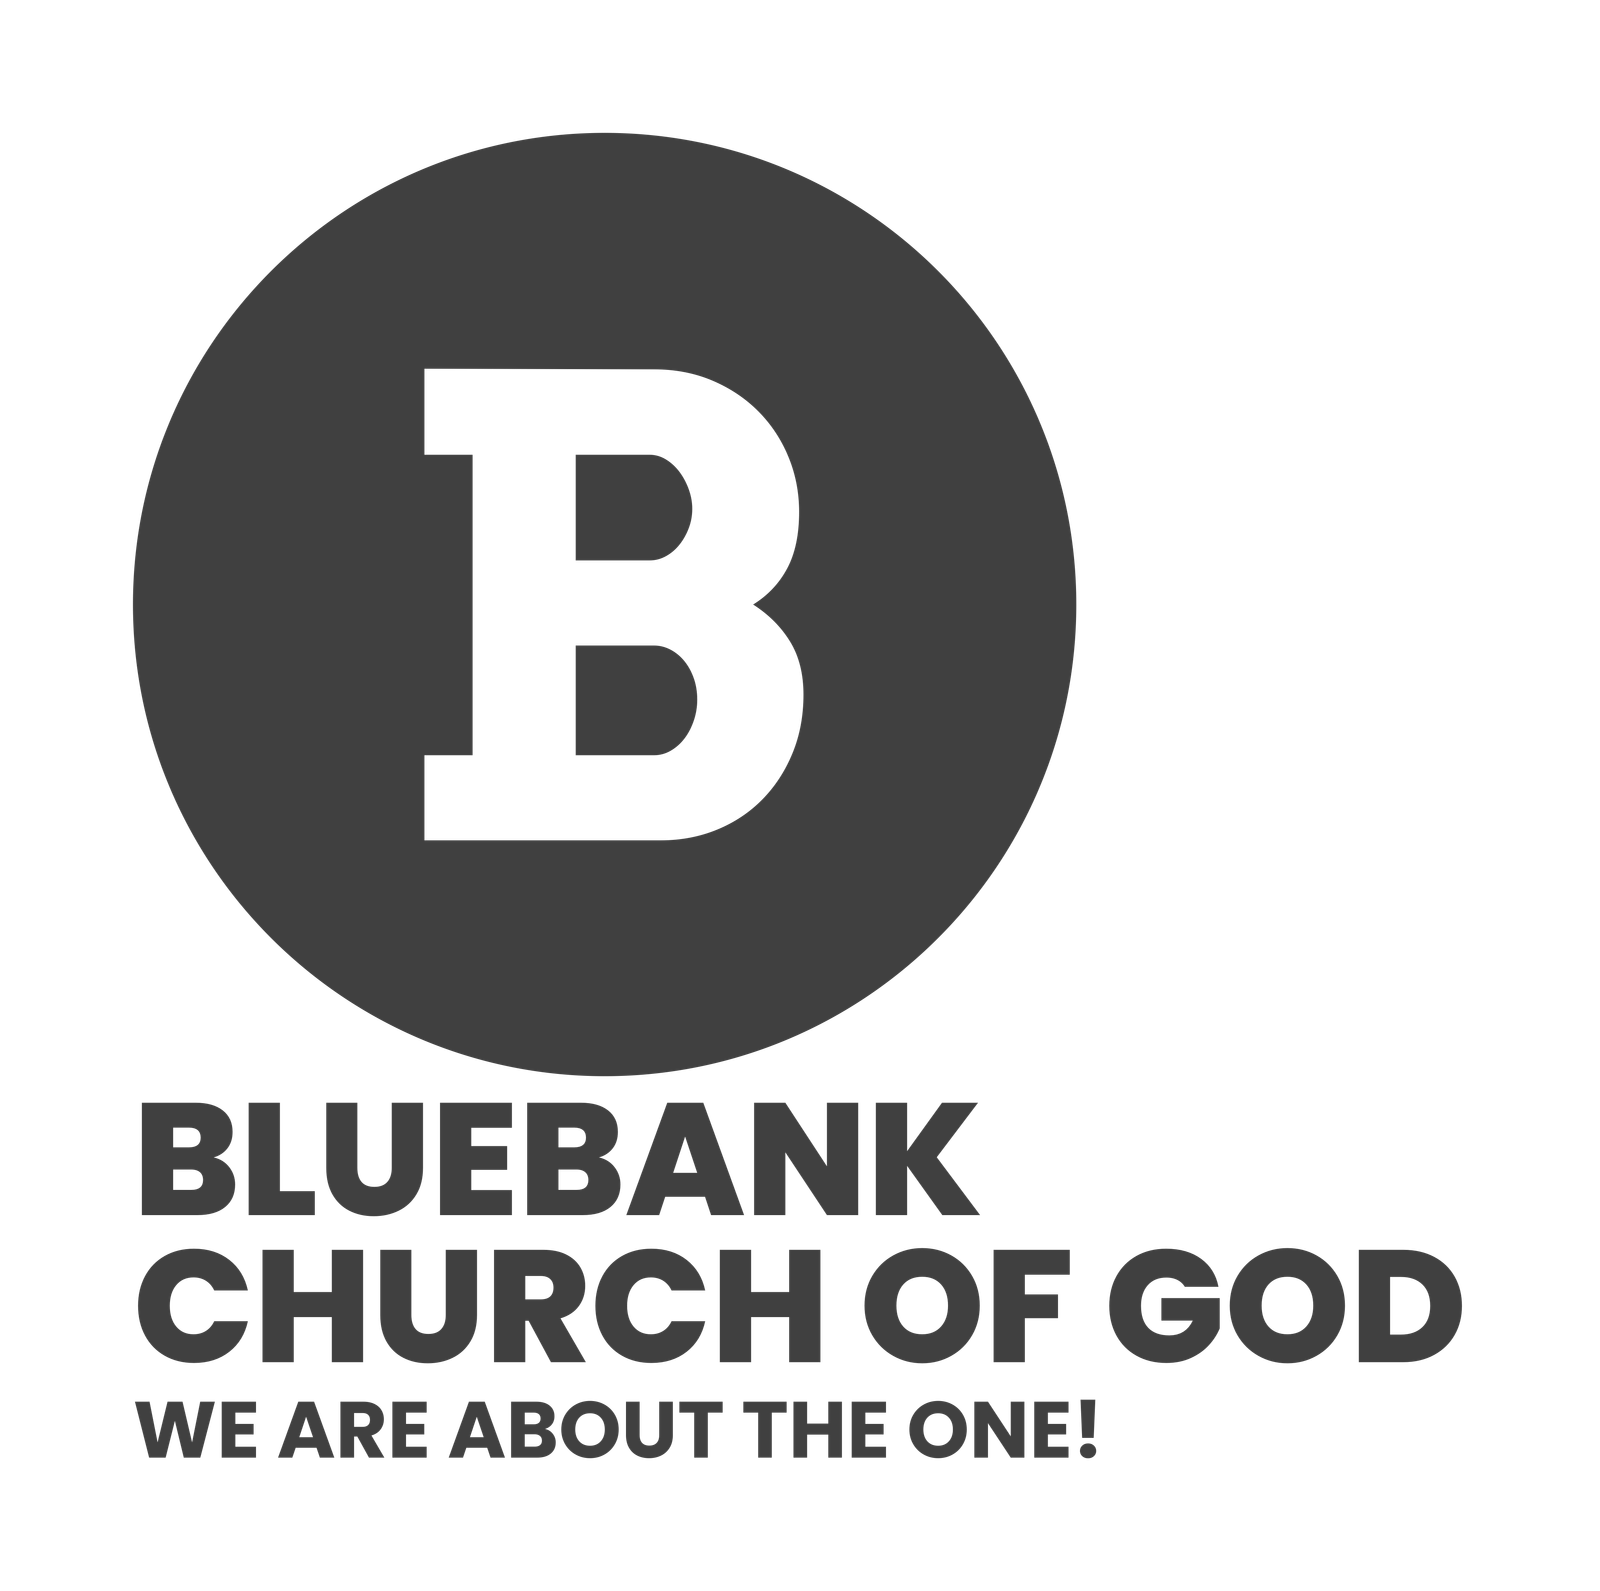 Bluebank Church of God